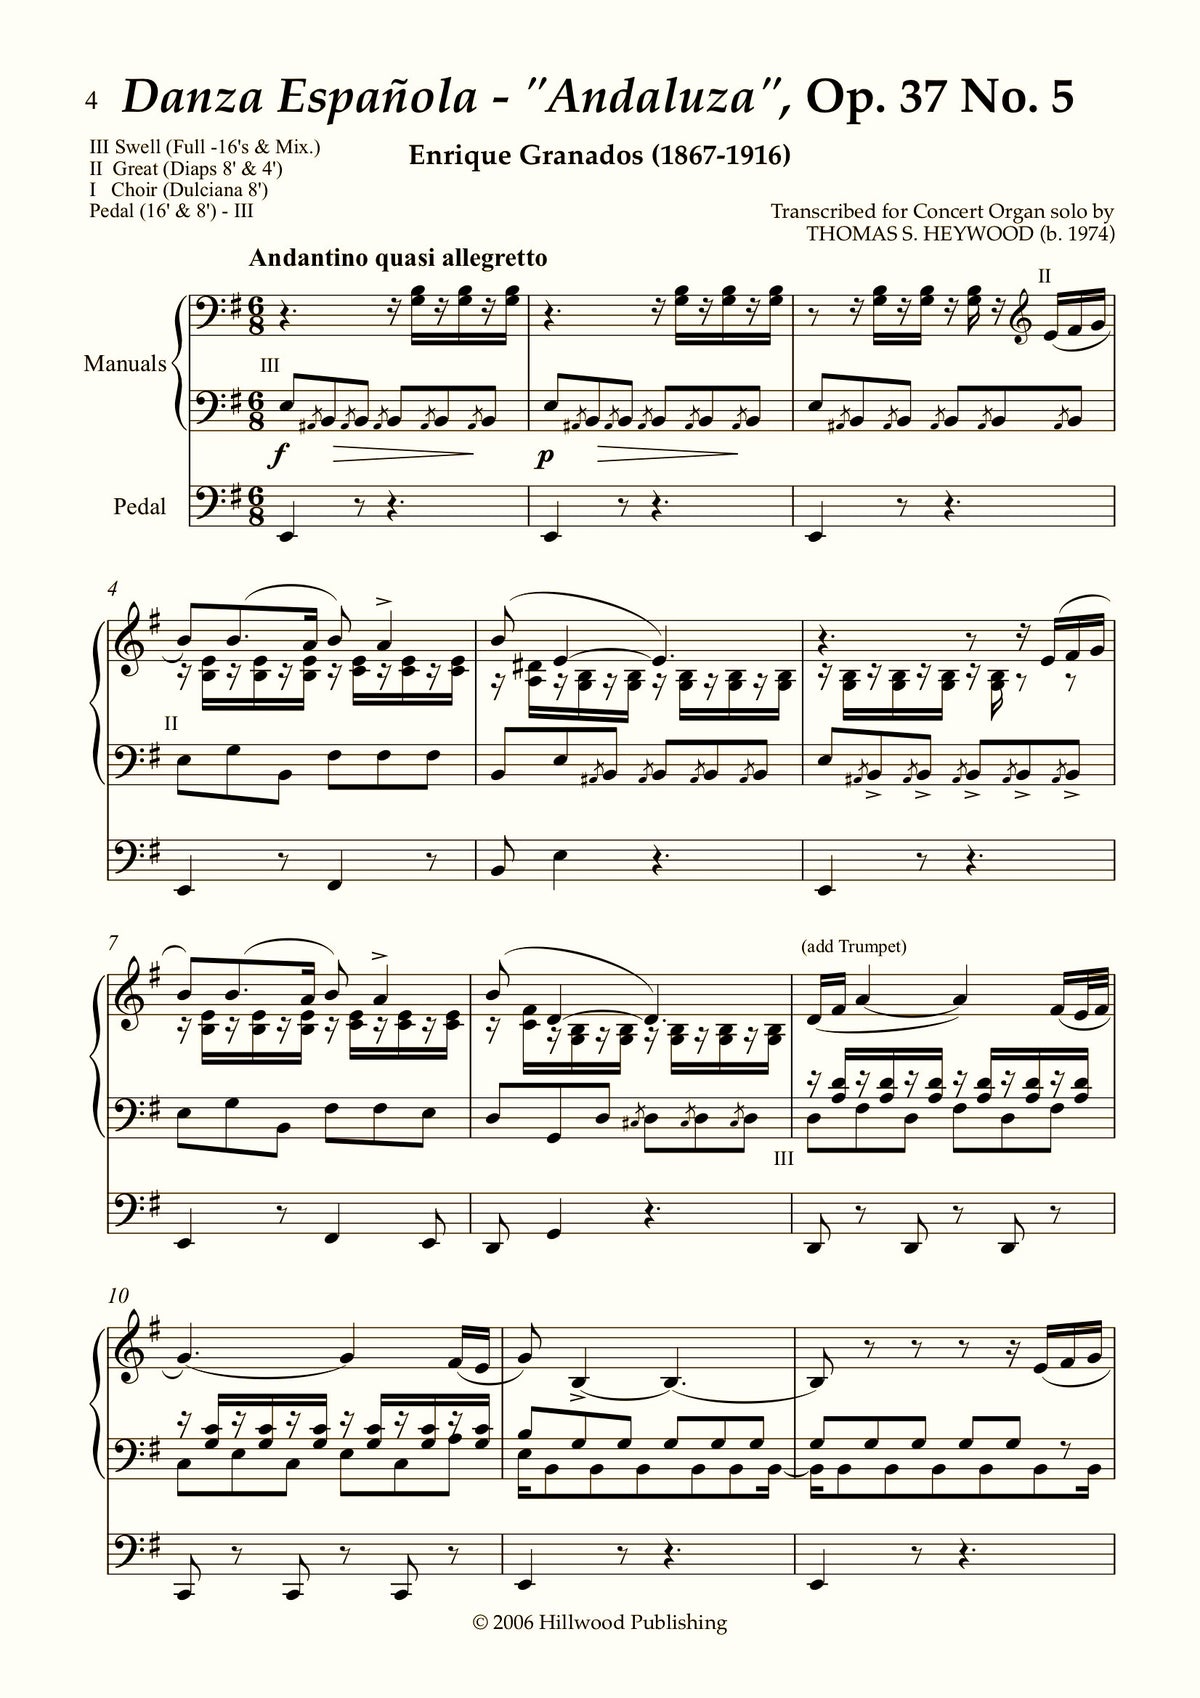 Granados/Heywood - Danza Espa�ola: 'Andaluza', Op. 37 No. 5 (Score) - Concert Organ International